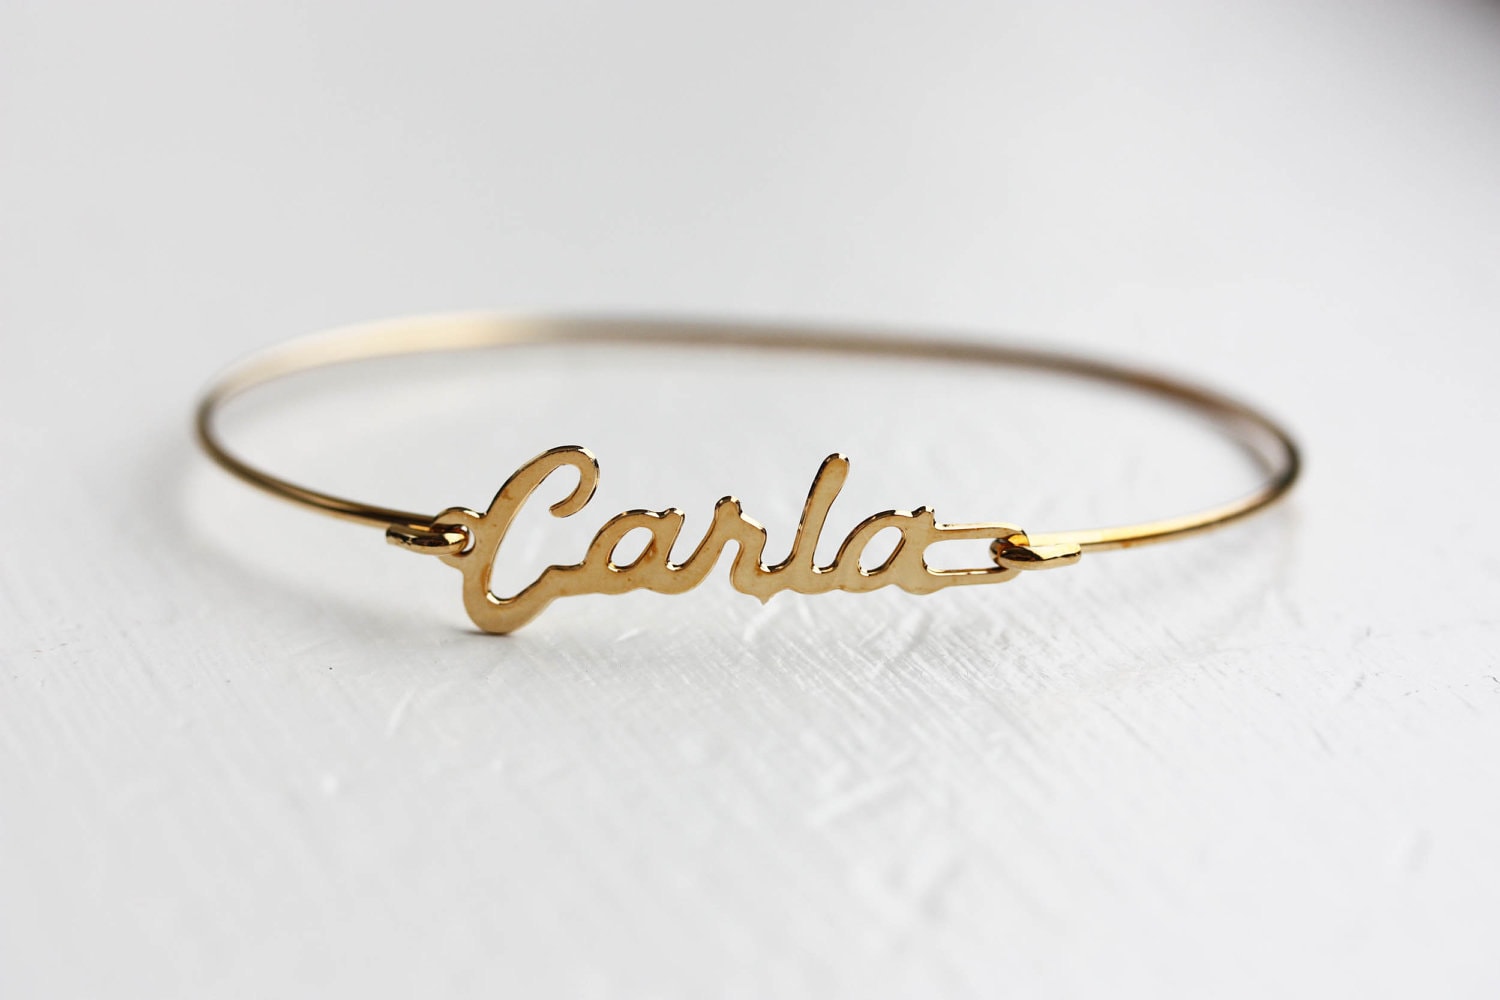 Carla Namensarmband Gold, Namensarmband, Vintage Goldarmband, Armband von diamentdesigns